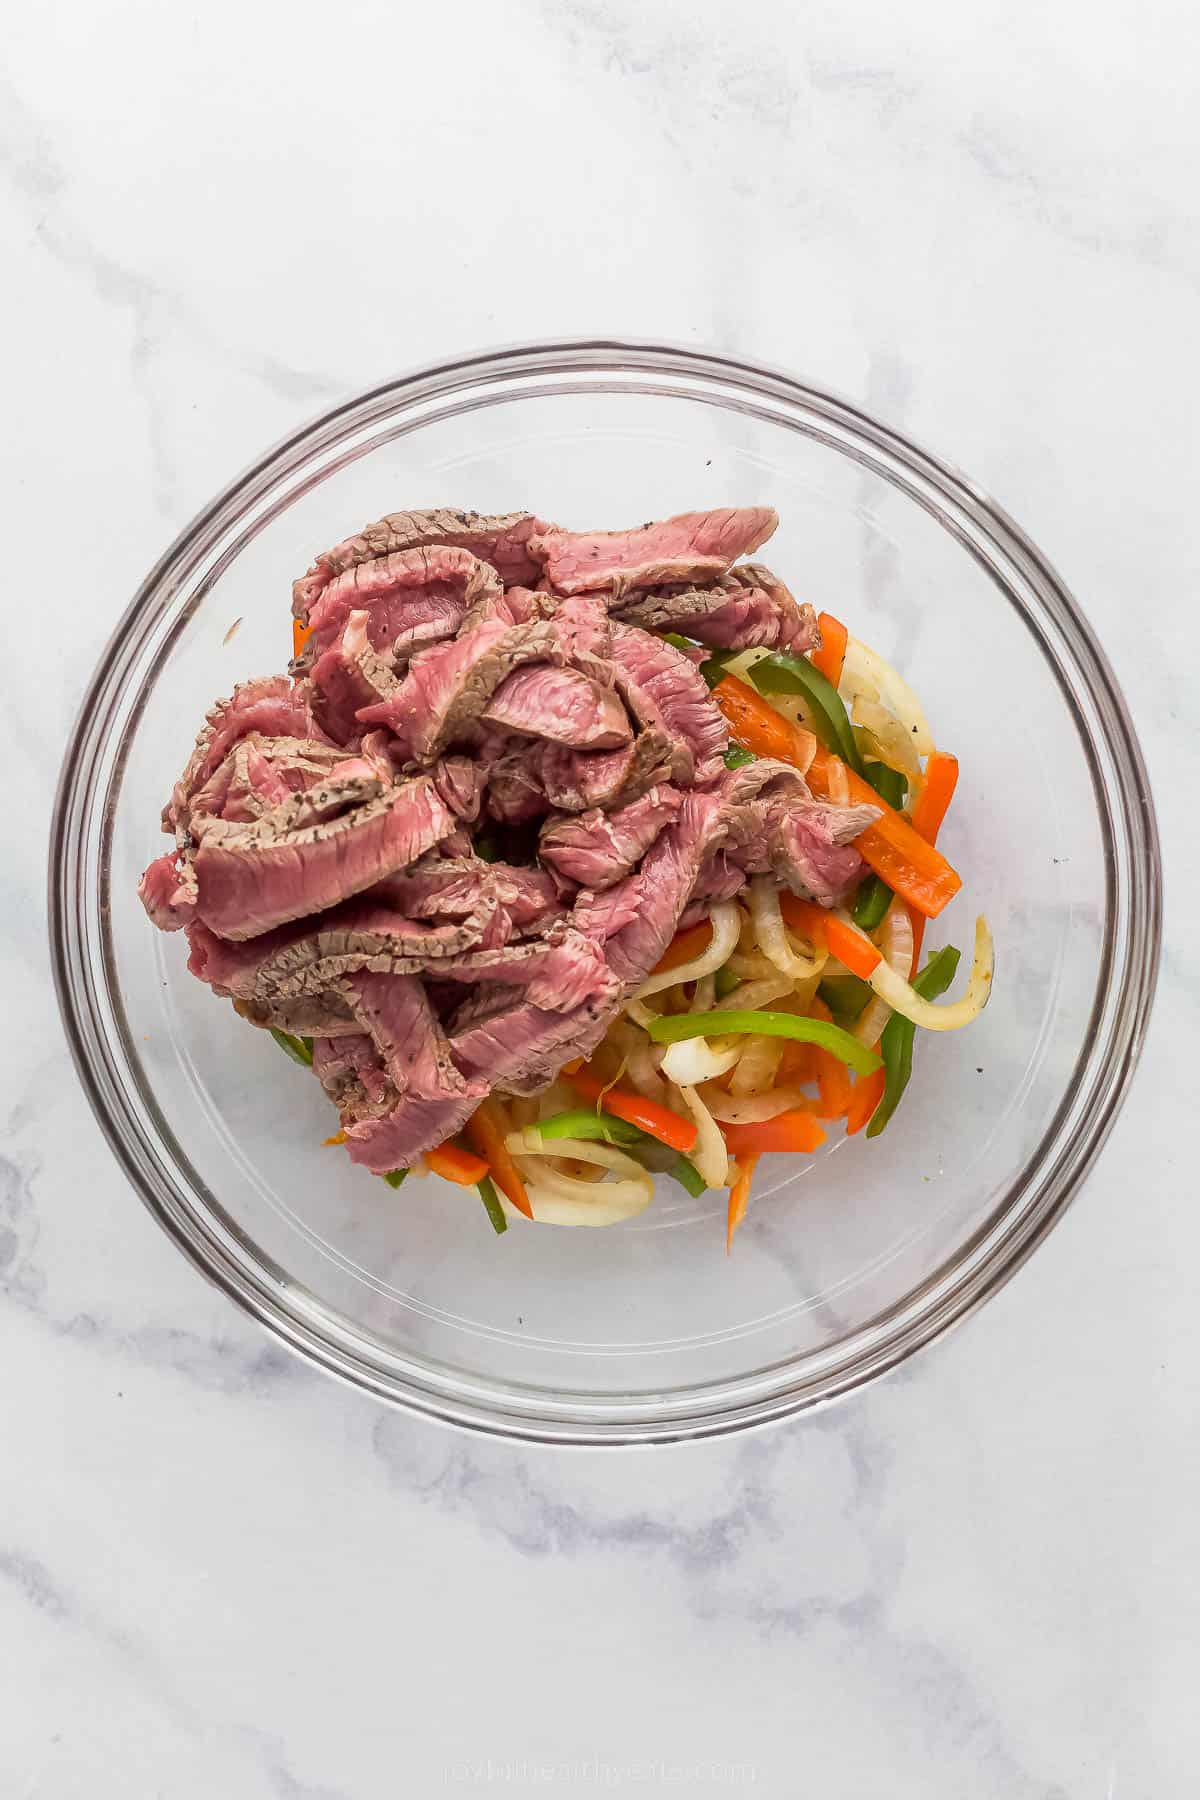 sliced steak and vegetables in a gl، bowl